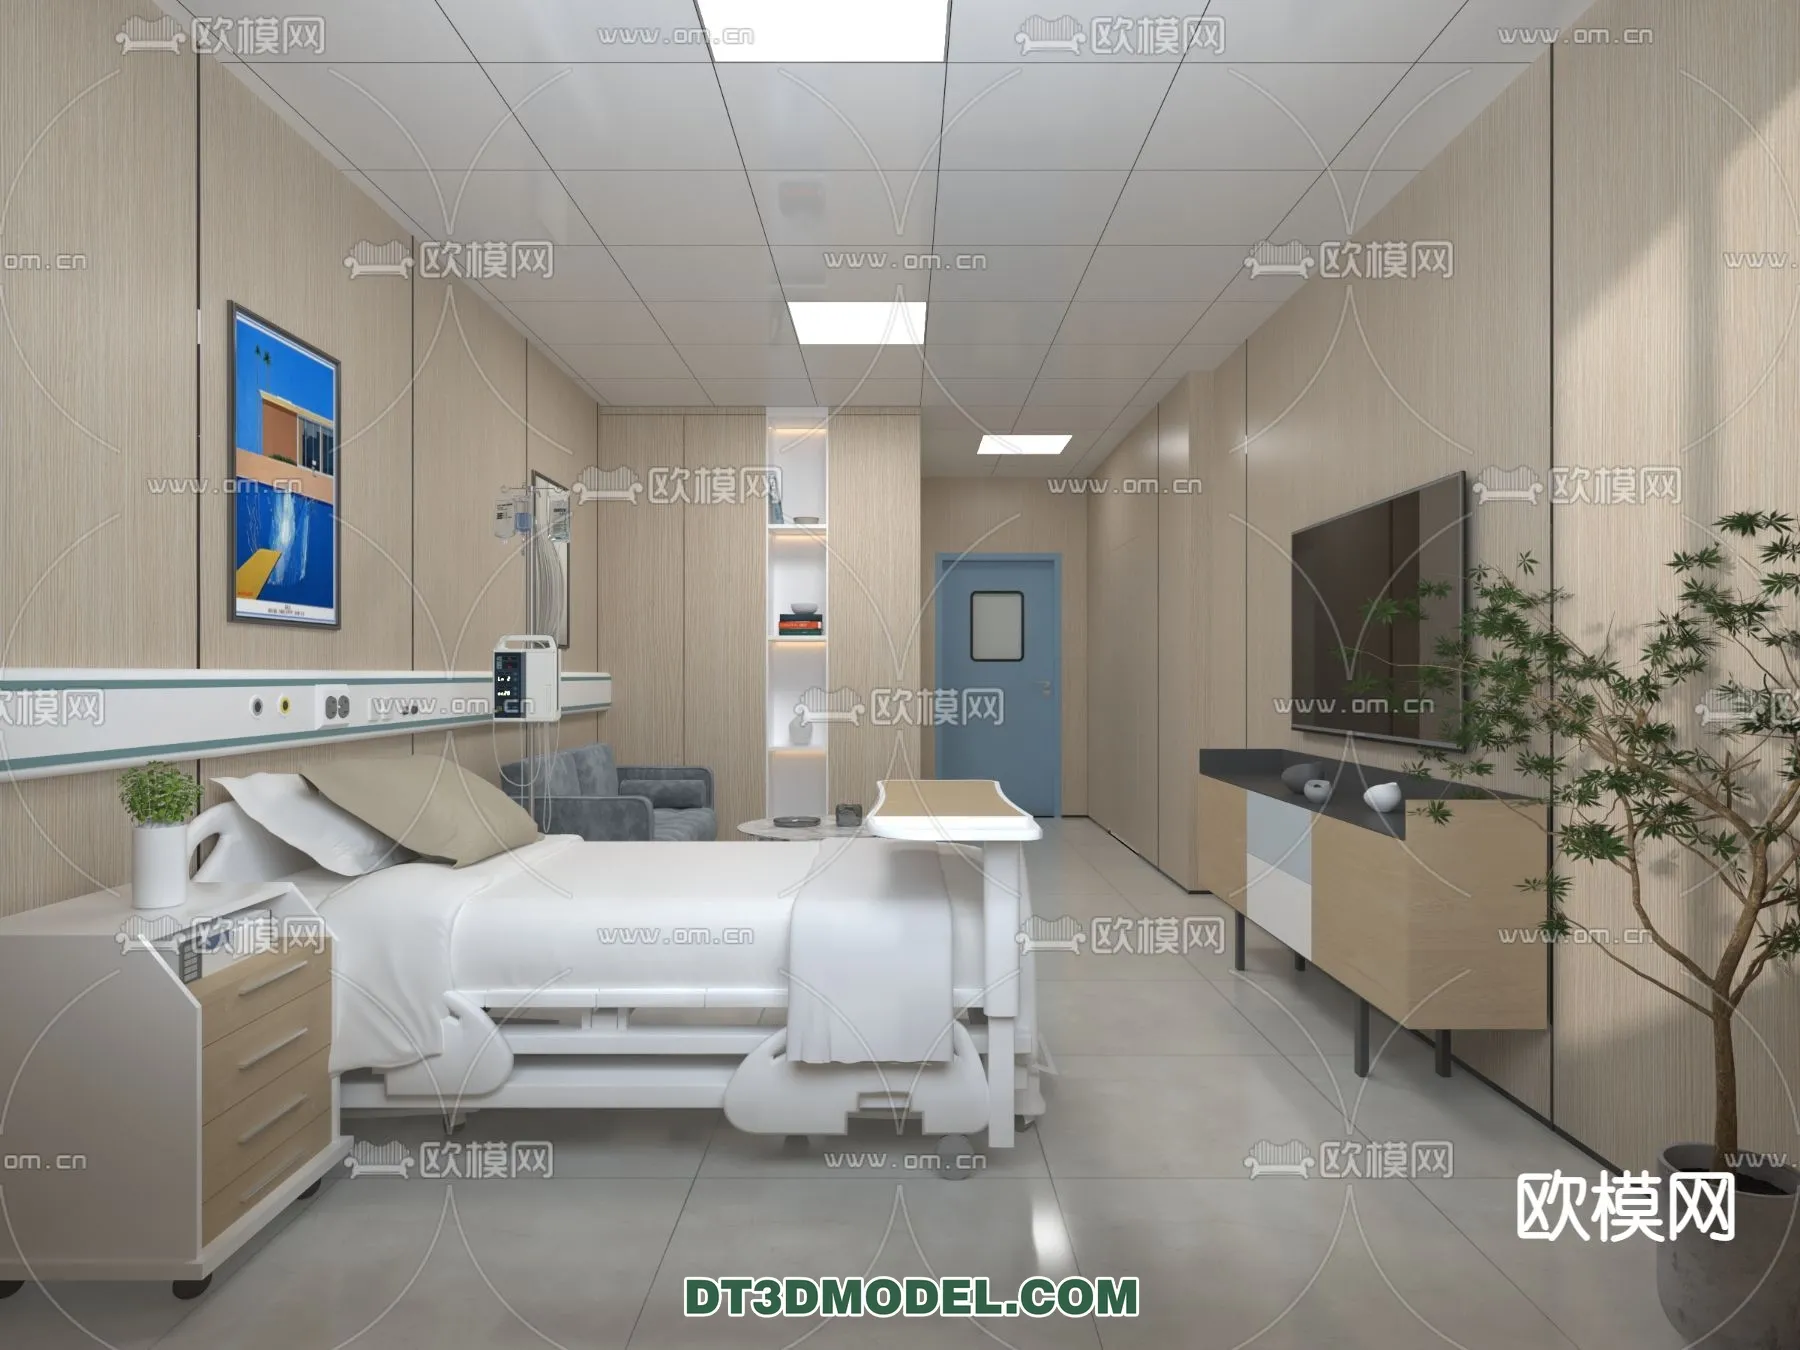 HOSPITAL 3D SCENES – MODERN – 0119